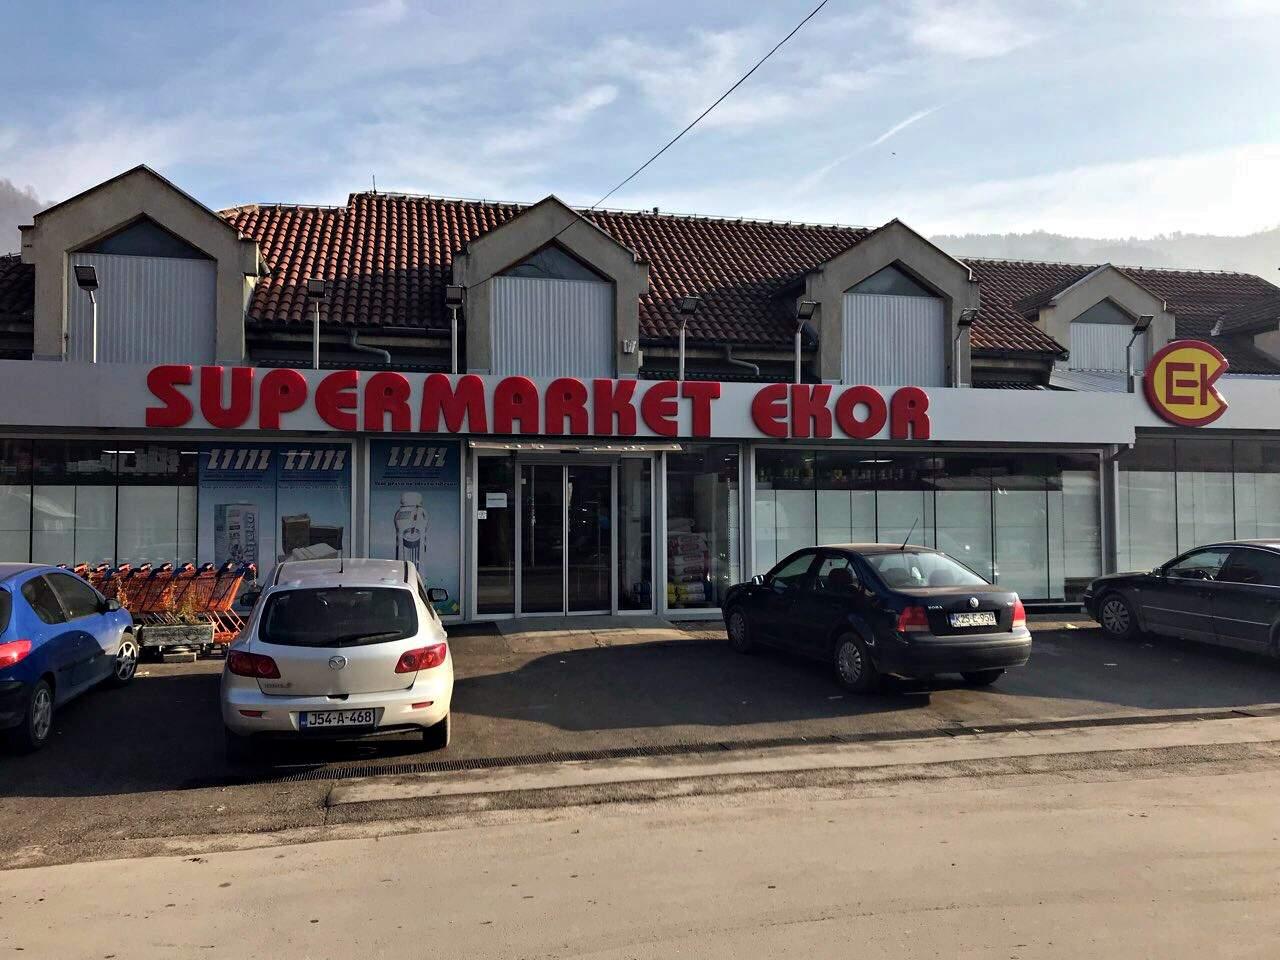 Supermarket “Ekor-Komerc”: Šefica isključila videonadzor - Avaz